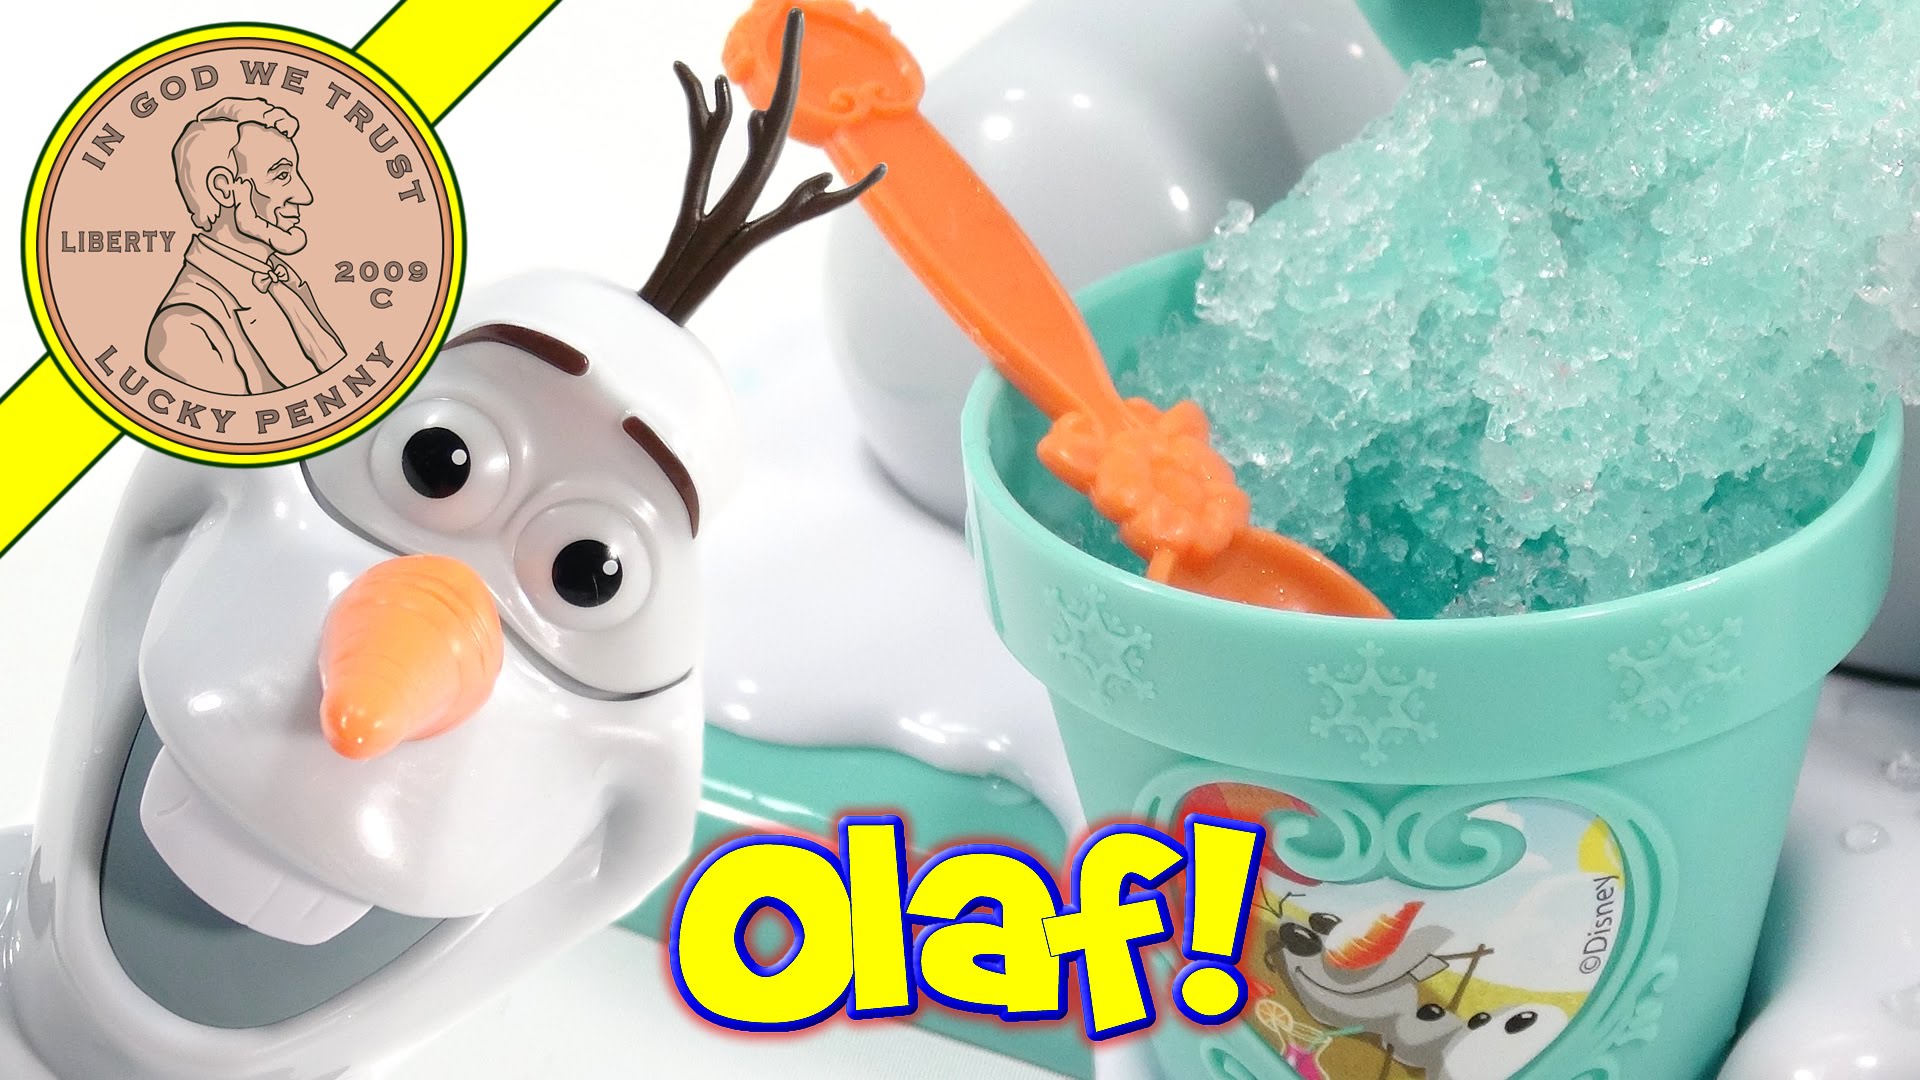 Disney Frozen Olaf Snow Cone Maker - YouTube